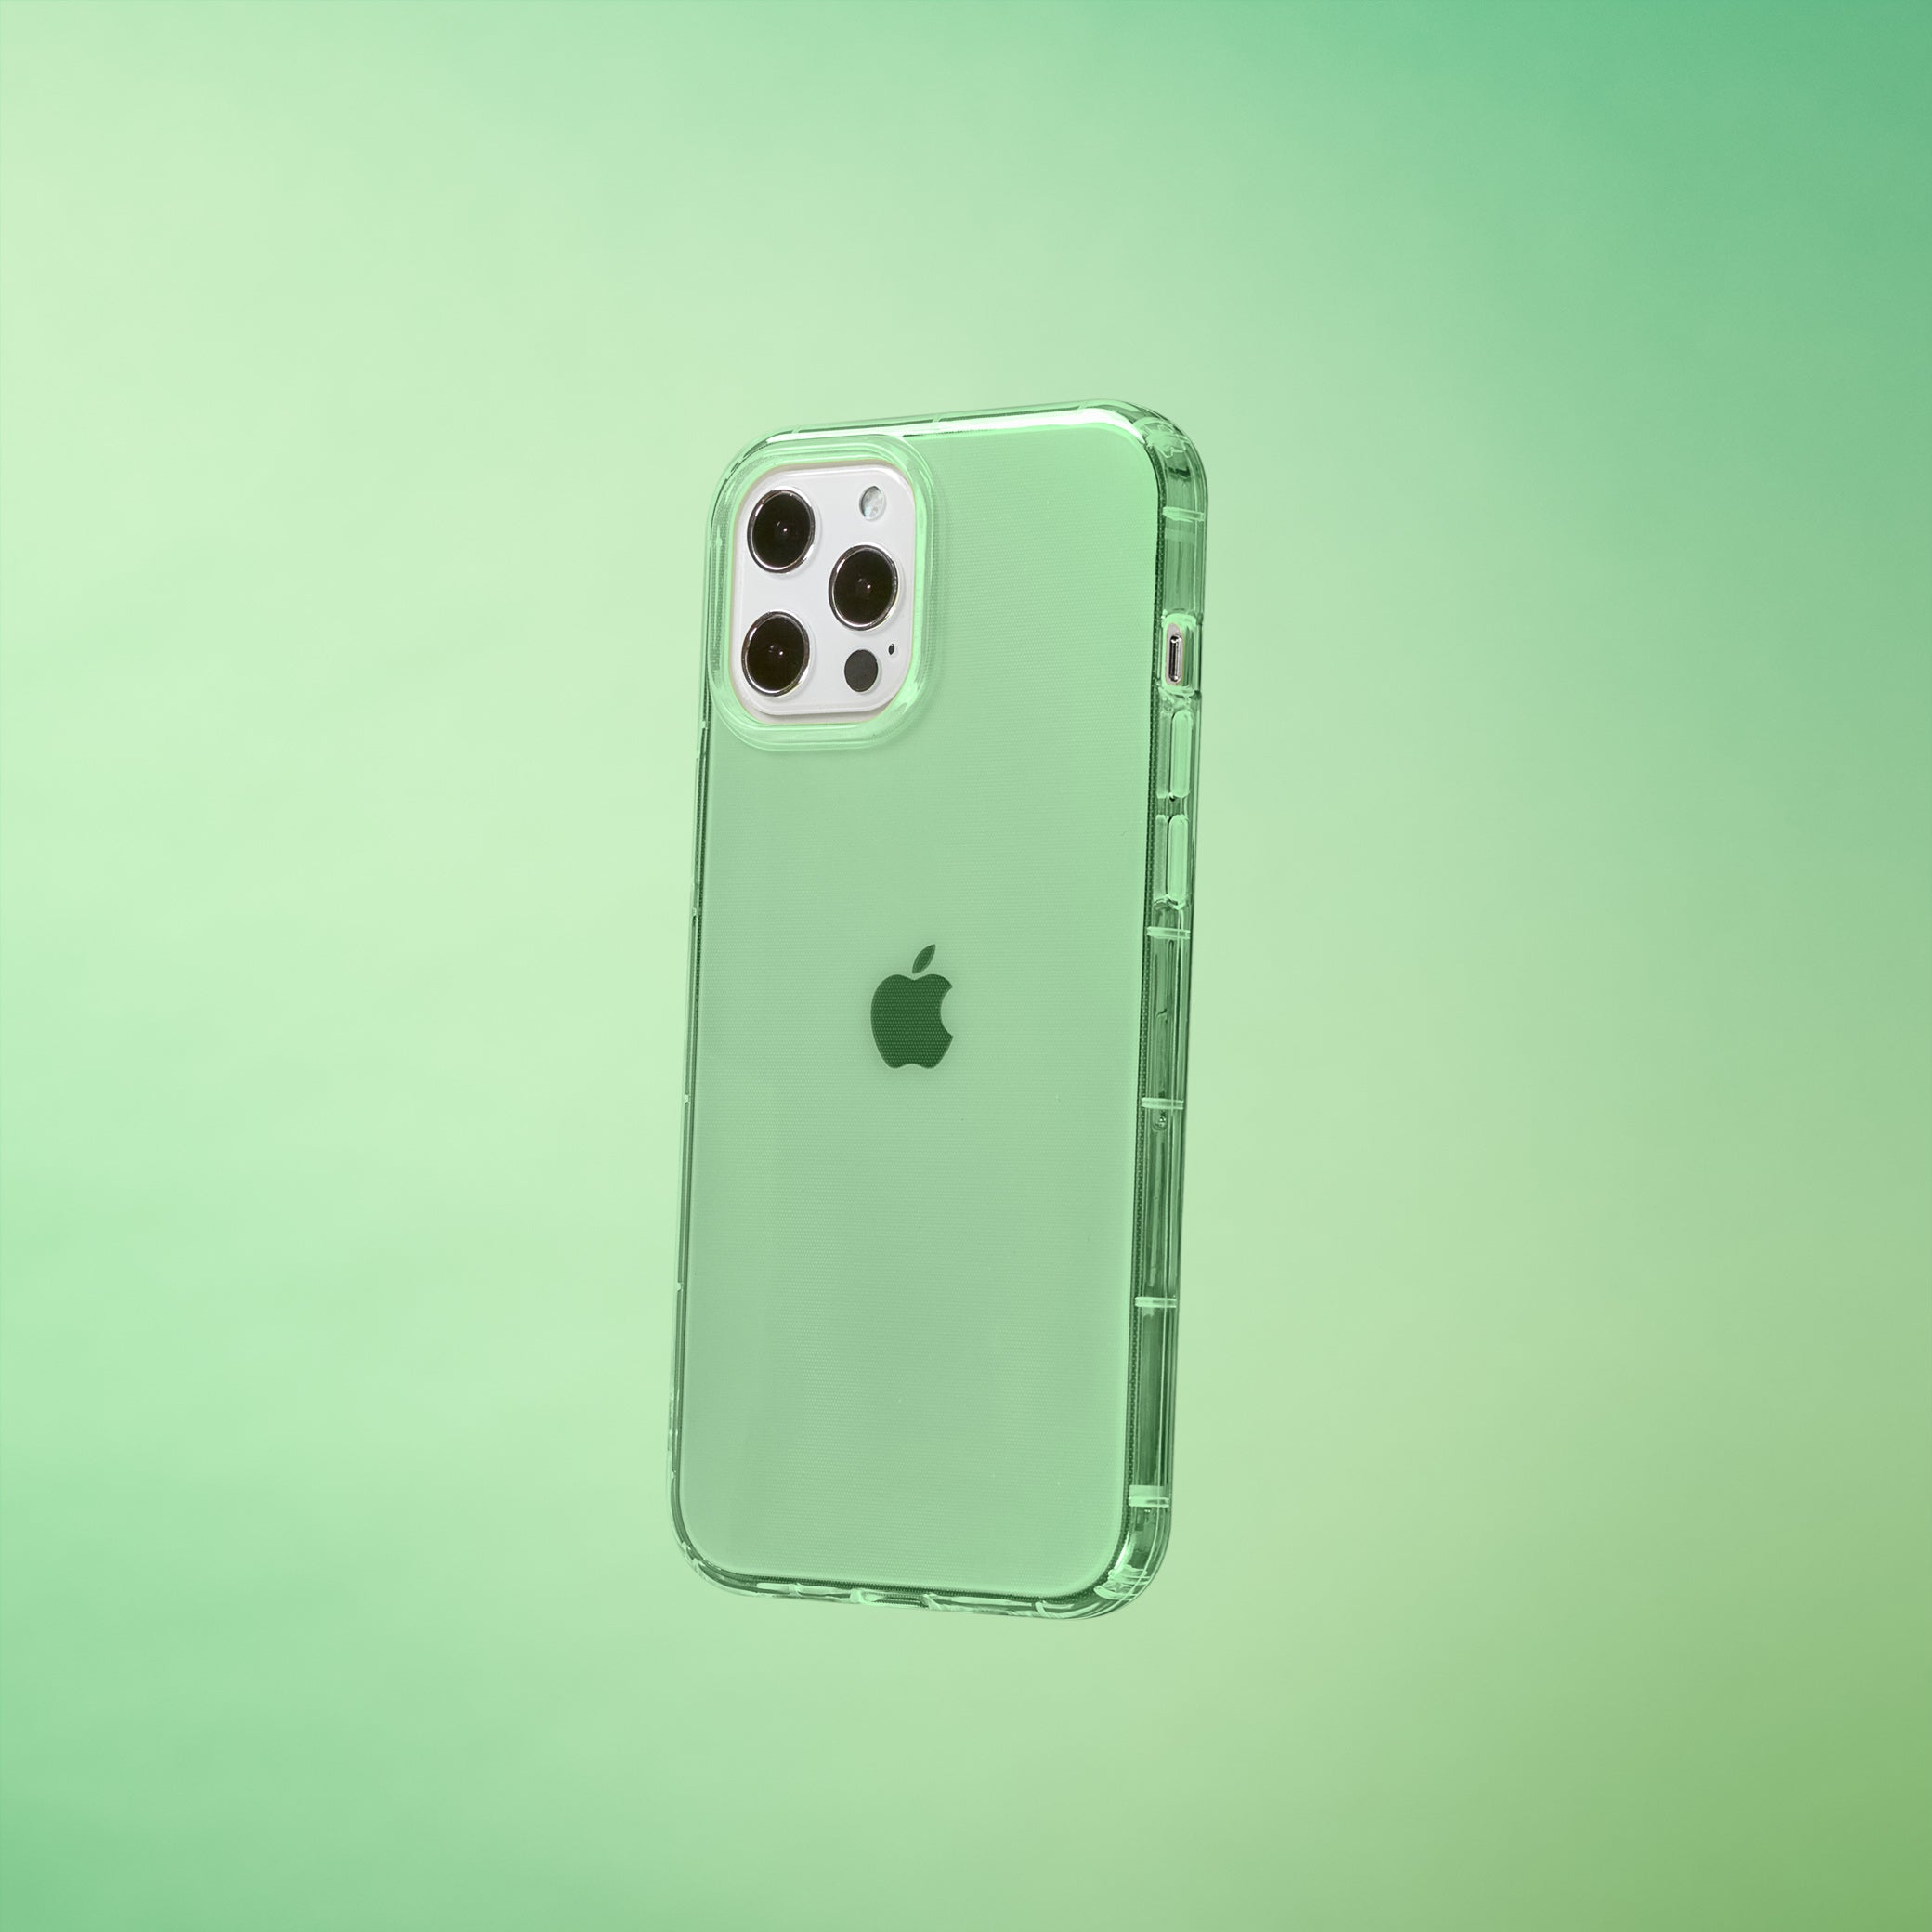 Highlighter Case for iPhone 12 Pro Max - Precious Emerald Green